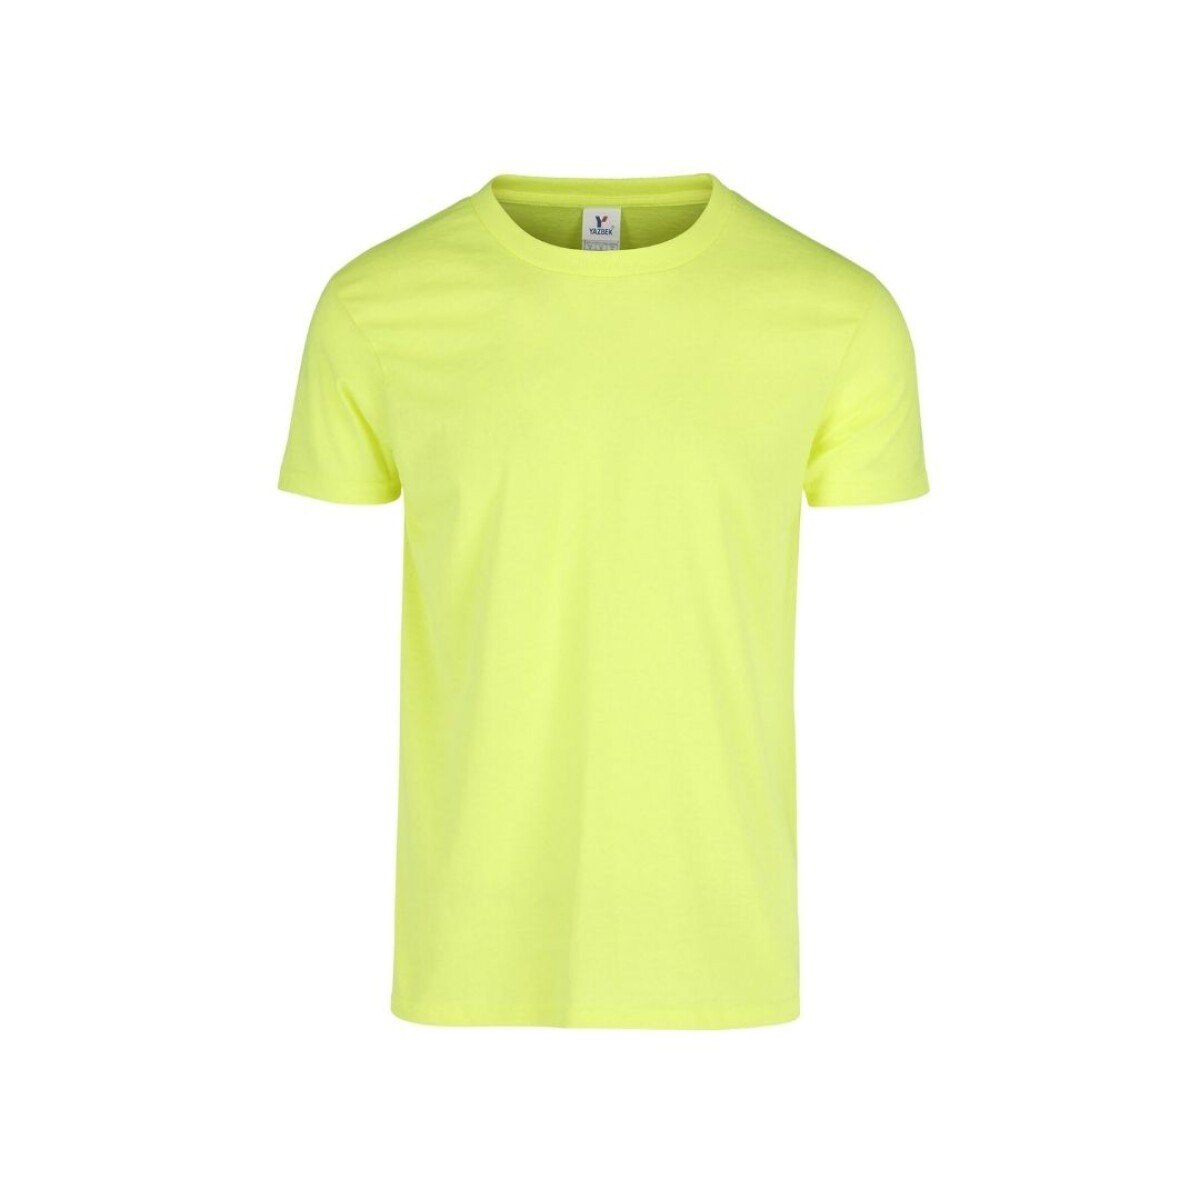 Camiseta a la base jaspe - Amarillo neón 